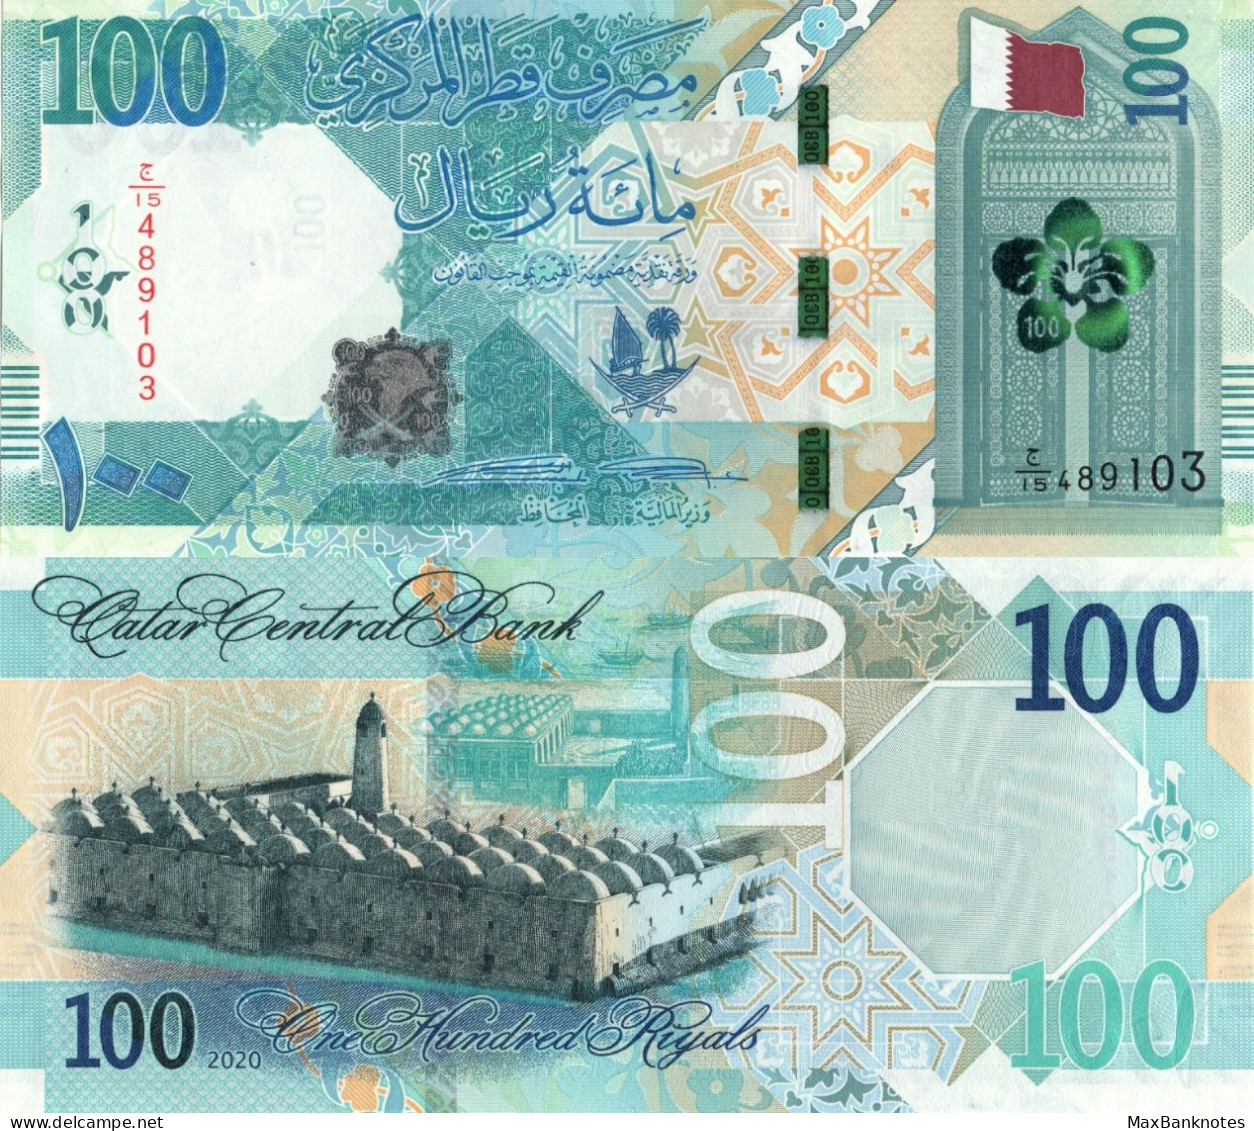 Qatar / 100 Dinars / 2020 / P-36(a) / UNC - Qatar